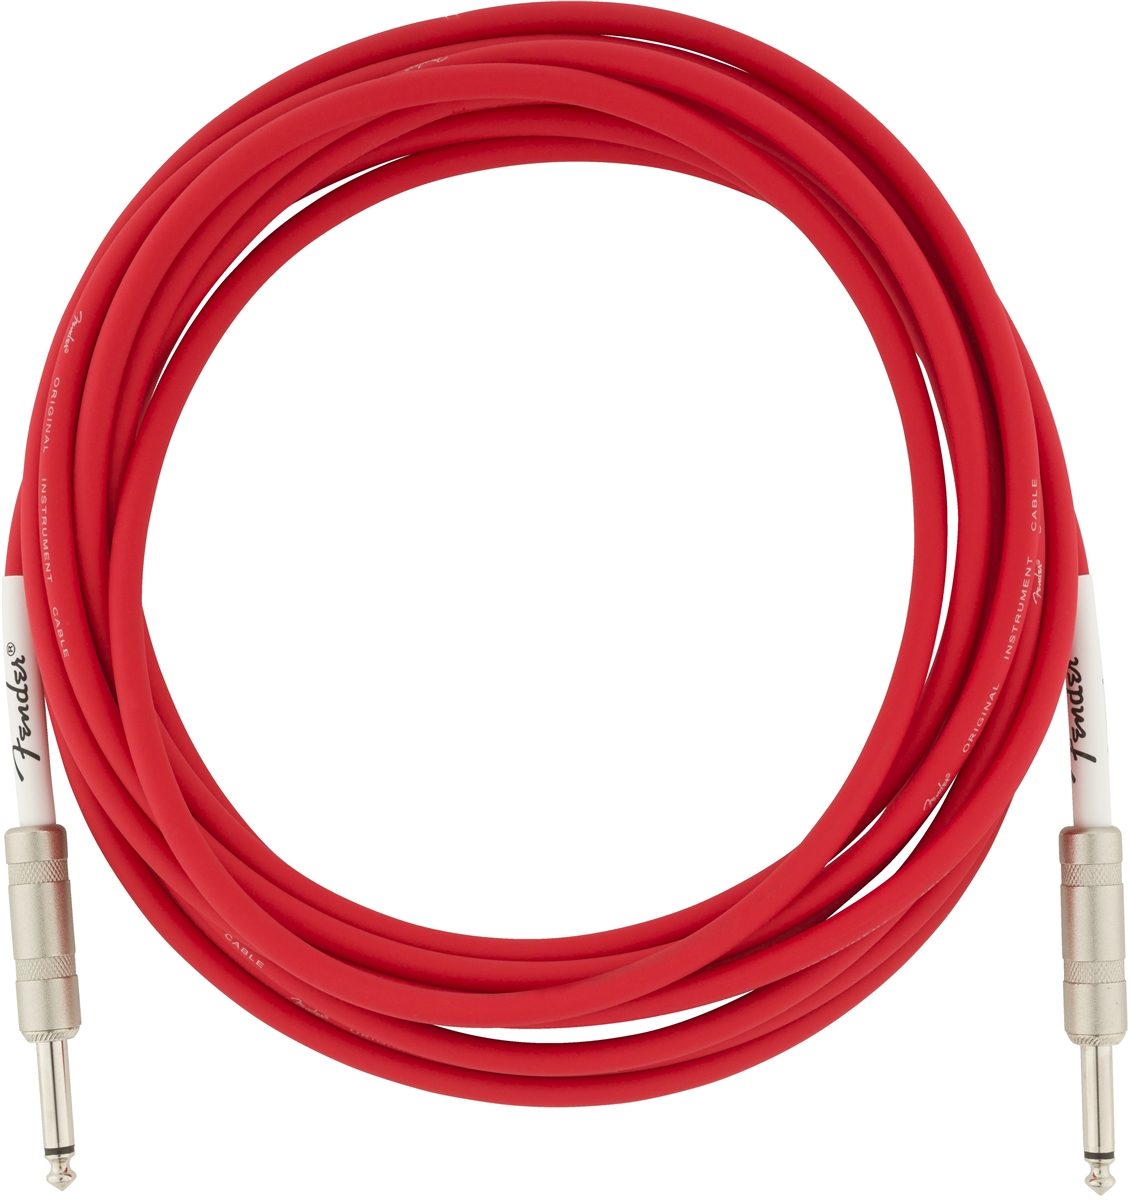 Original Cable 18.6FT Fiesta Red追加画像